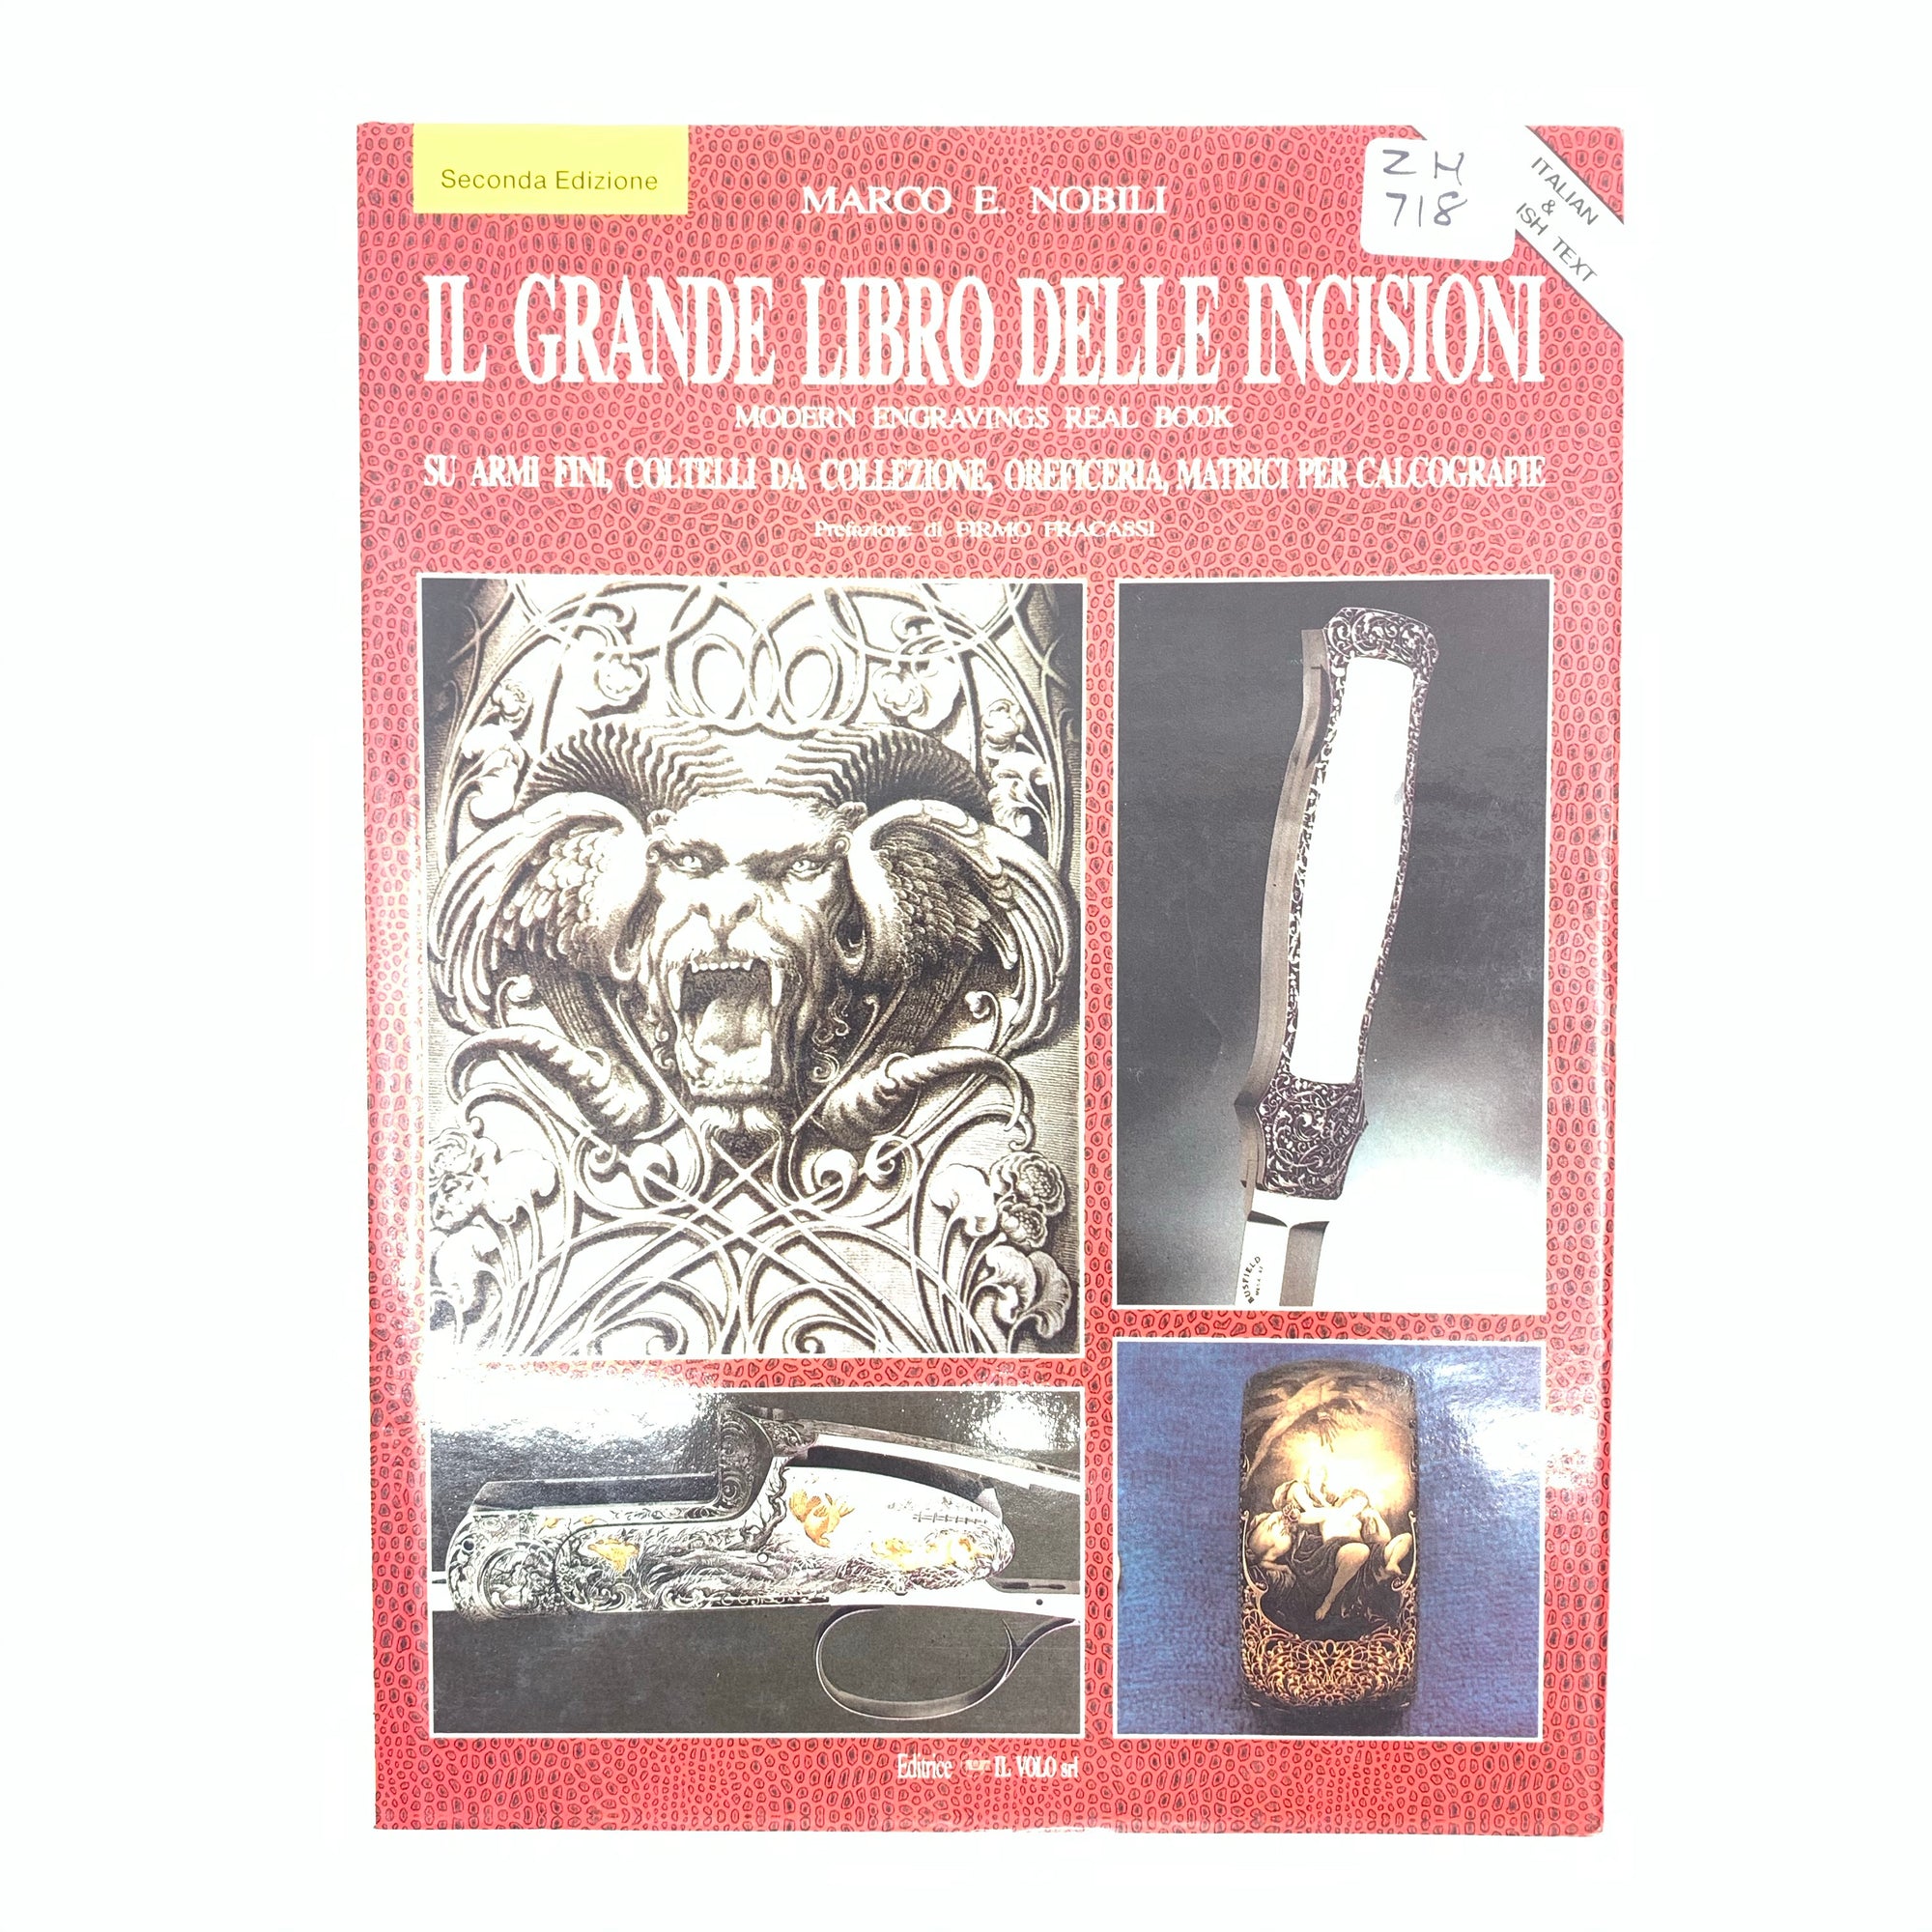 IL Grande Libron Delta Incision Modern Engravings Italian & English Text Marco E Nobili HC Dust Jacket 333 pgs